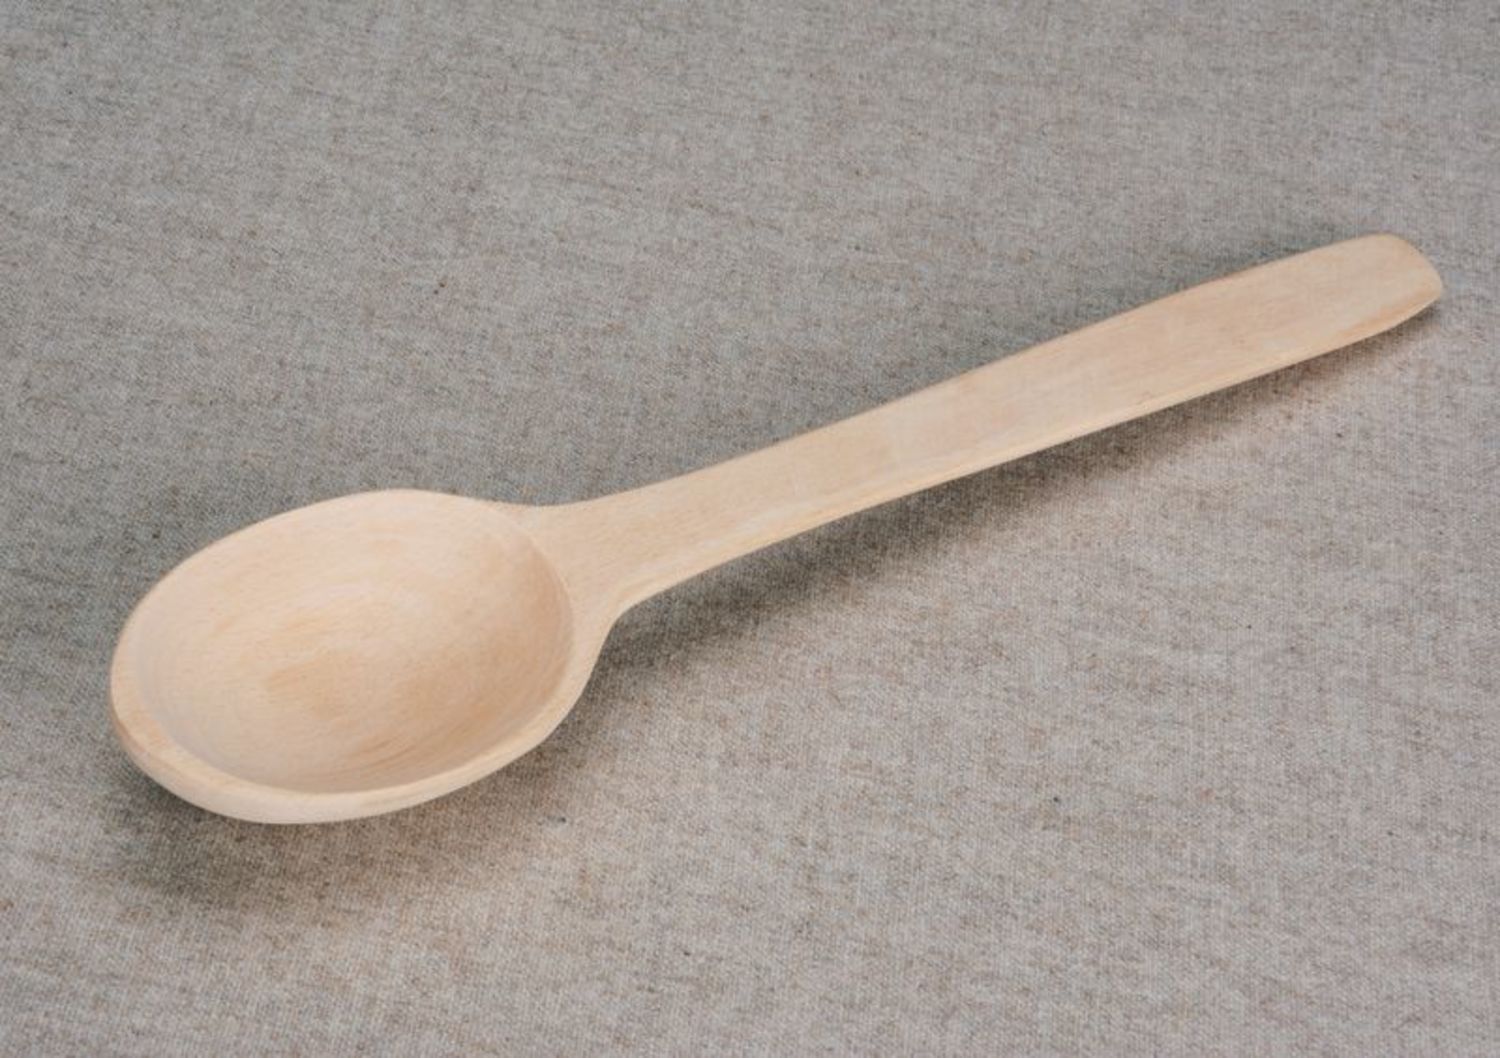 Wooden spoon photo 5